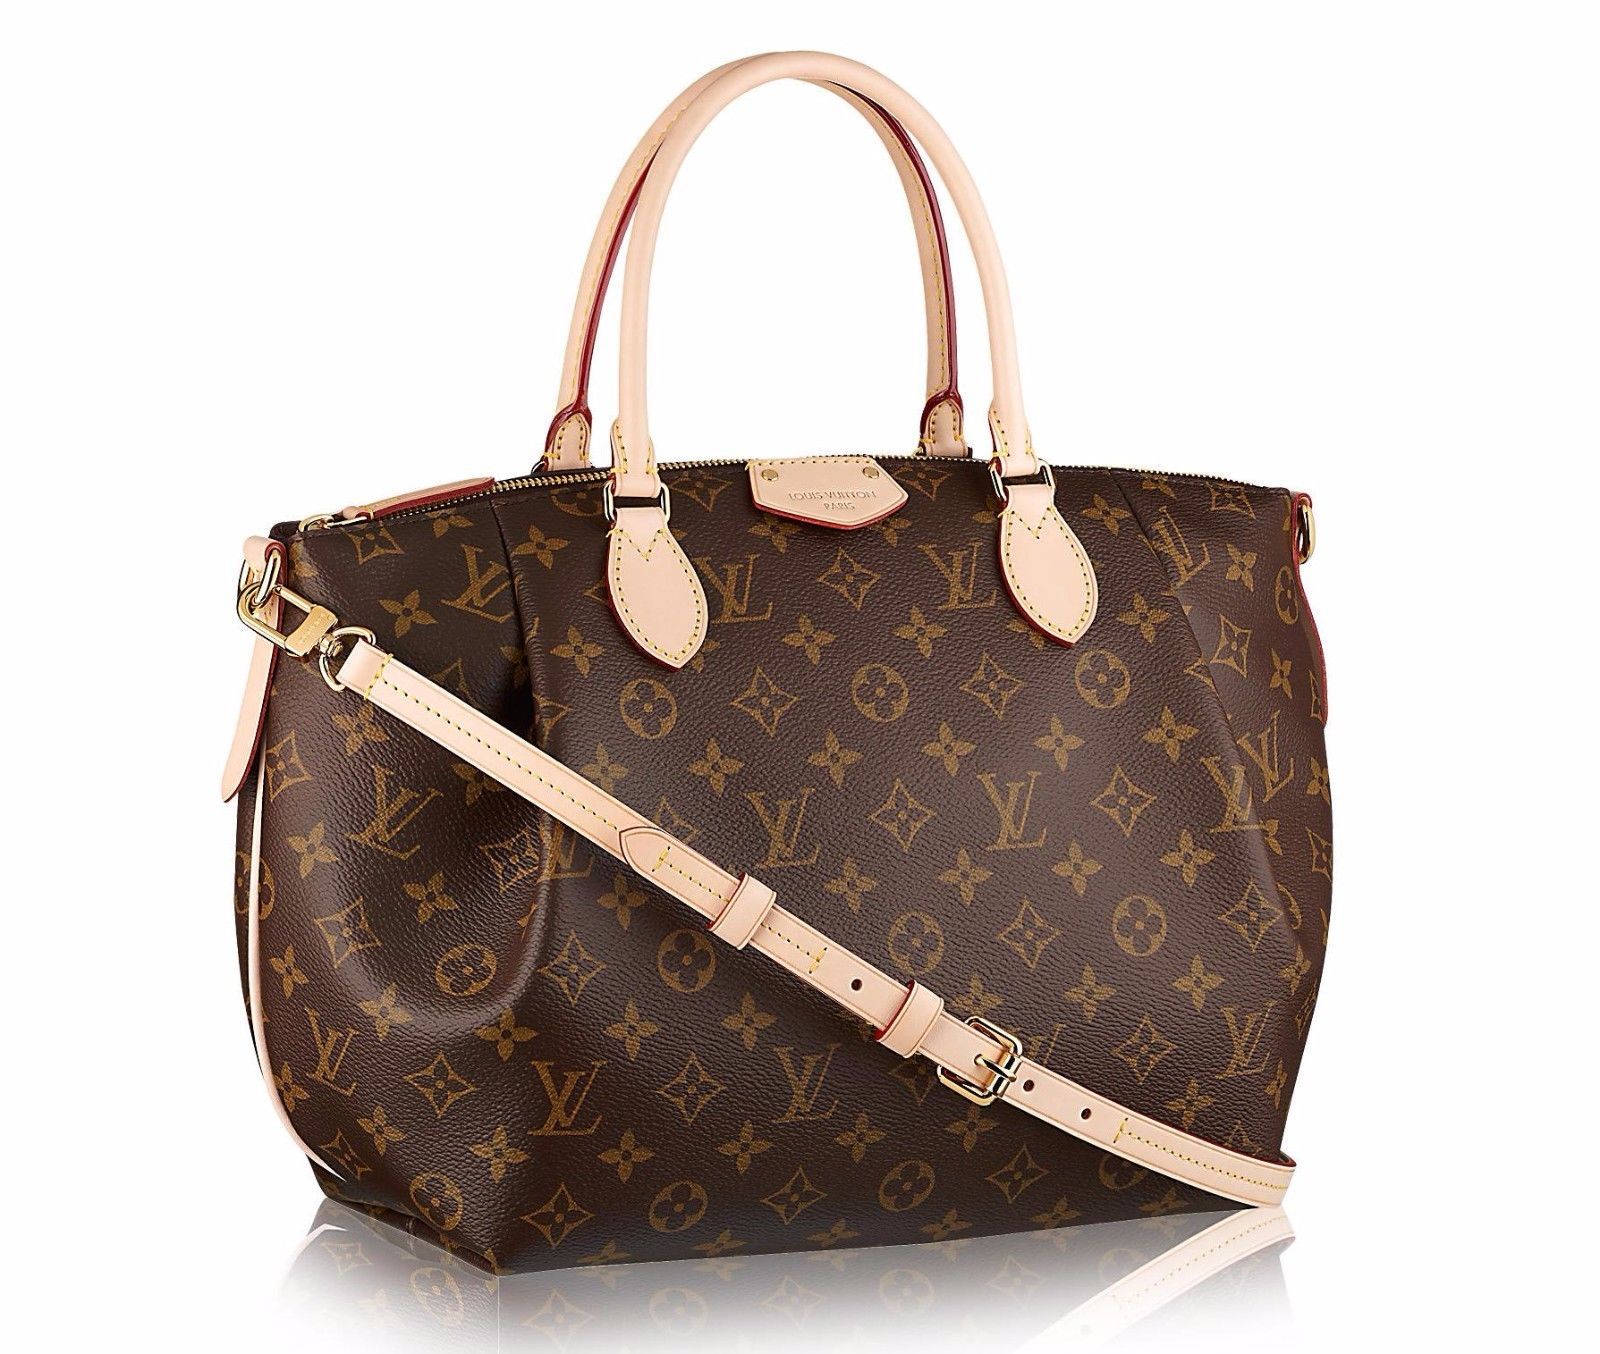 NEW! Geniune/Authentic Louis Vuitton Monogram Turenne MM Tote - Handbags & Purses